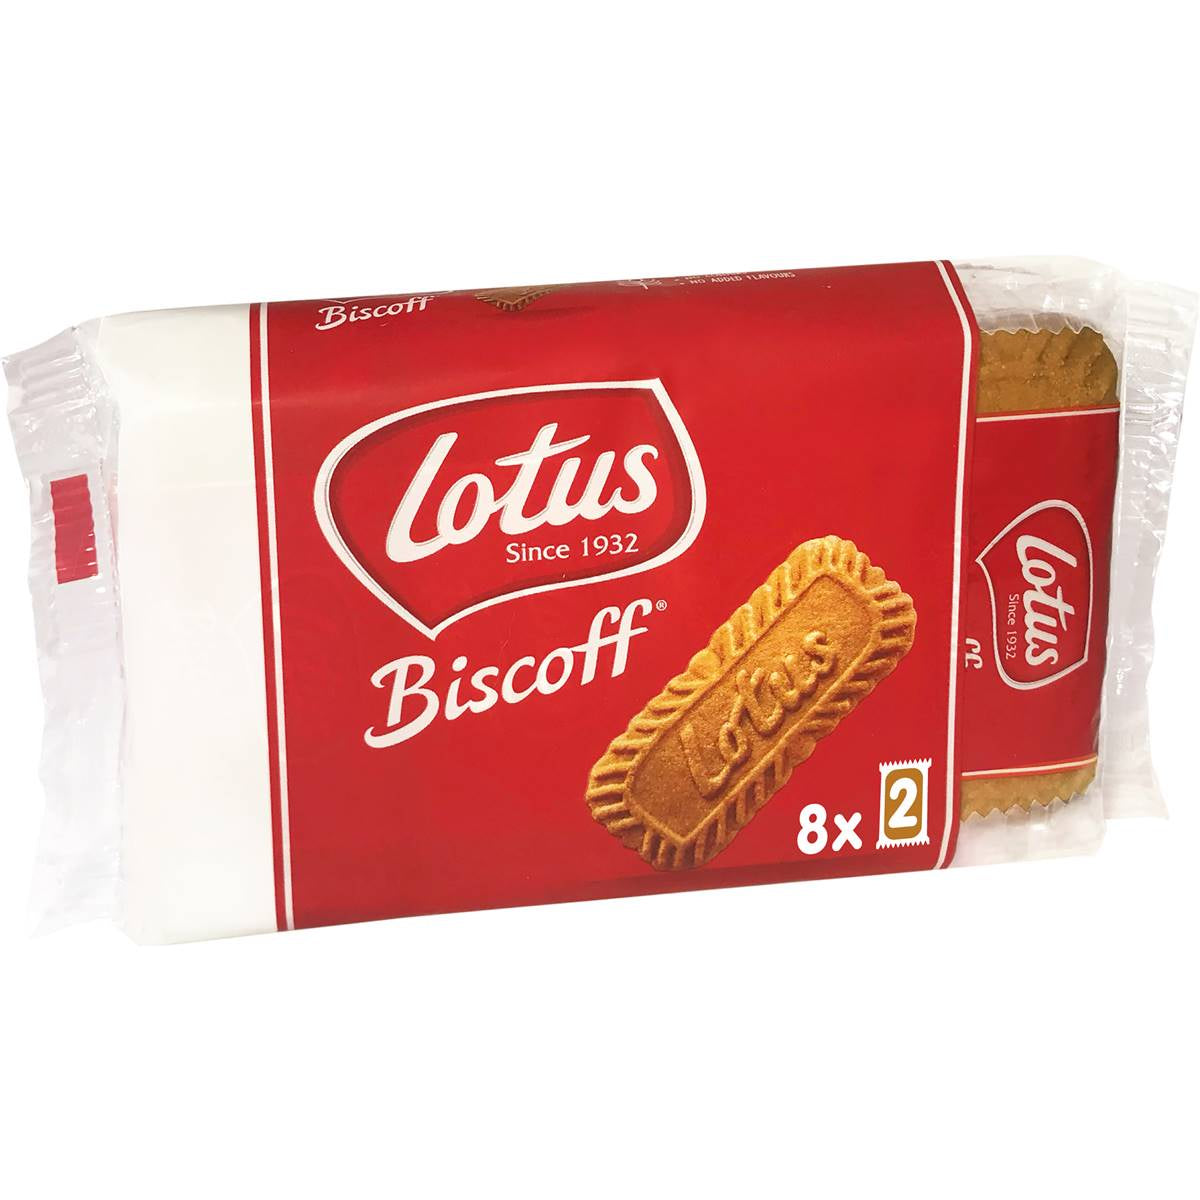 Lotus Biscoff Biscuit 8x 2pk